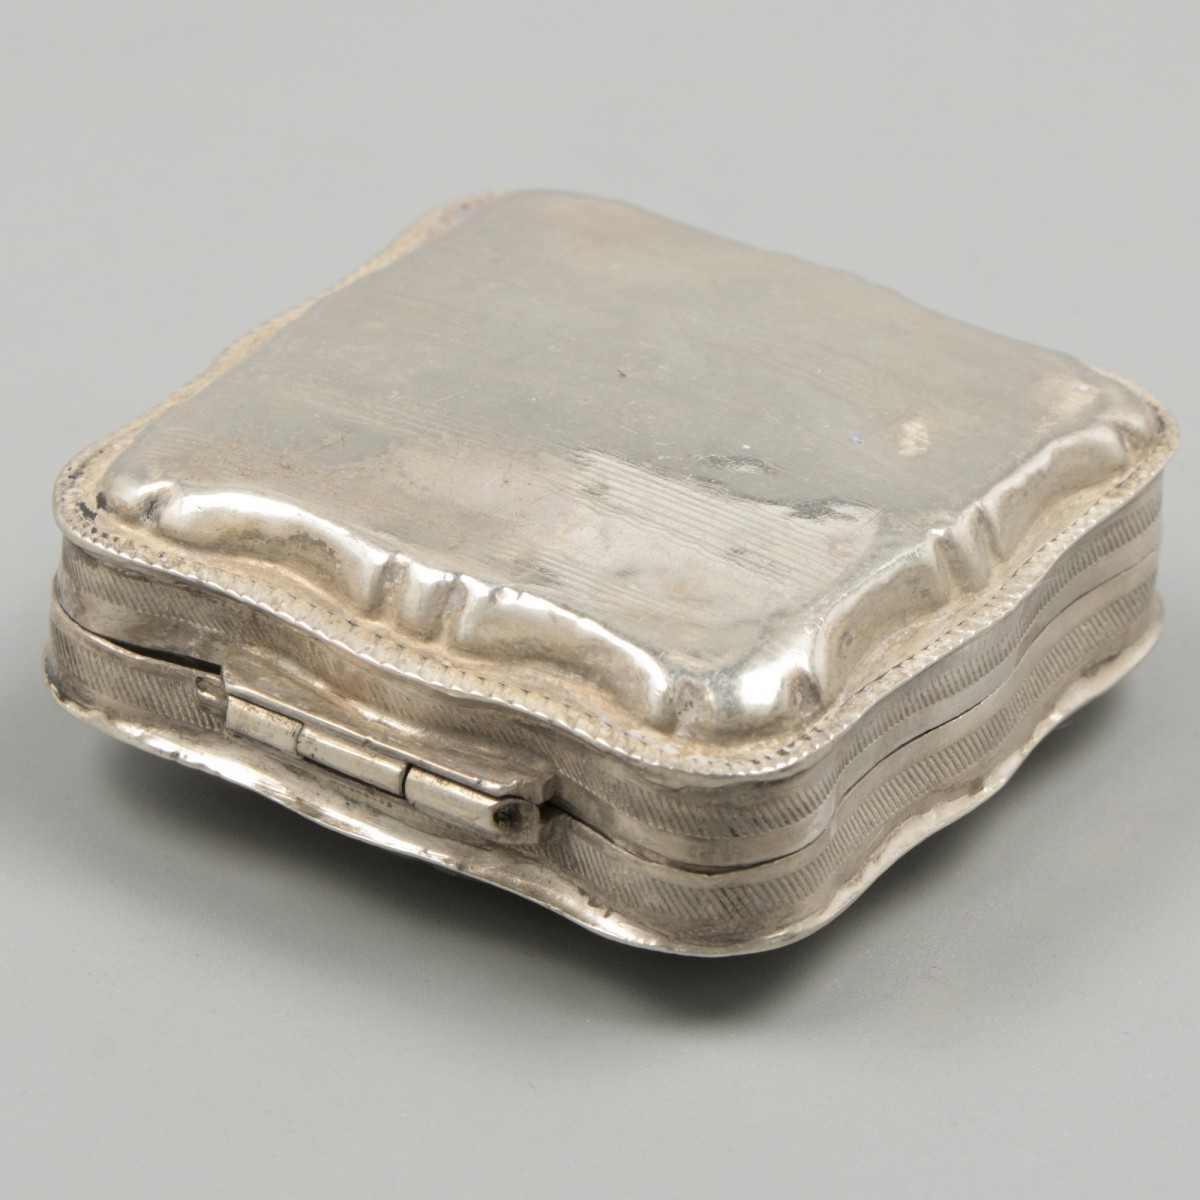 Peppermint box (Schoonhoven, Abraham van der Sluijs 1857-1881) silver. - Image 2 of 6